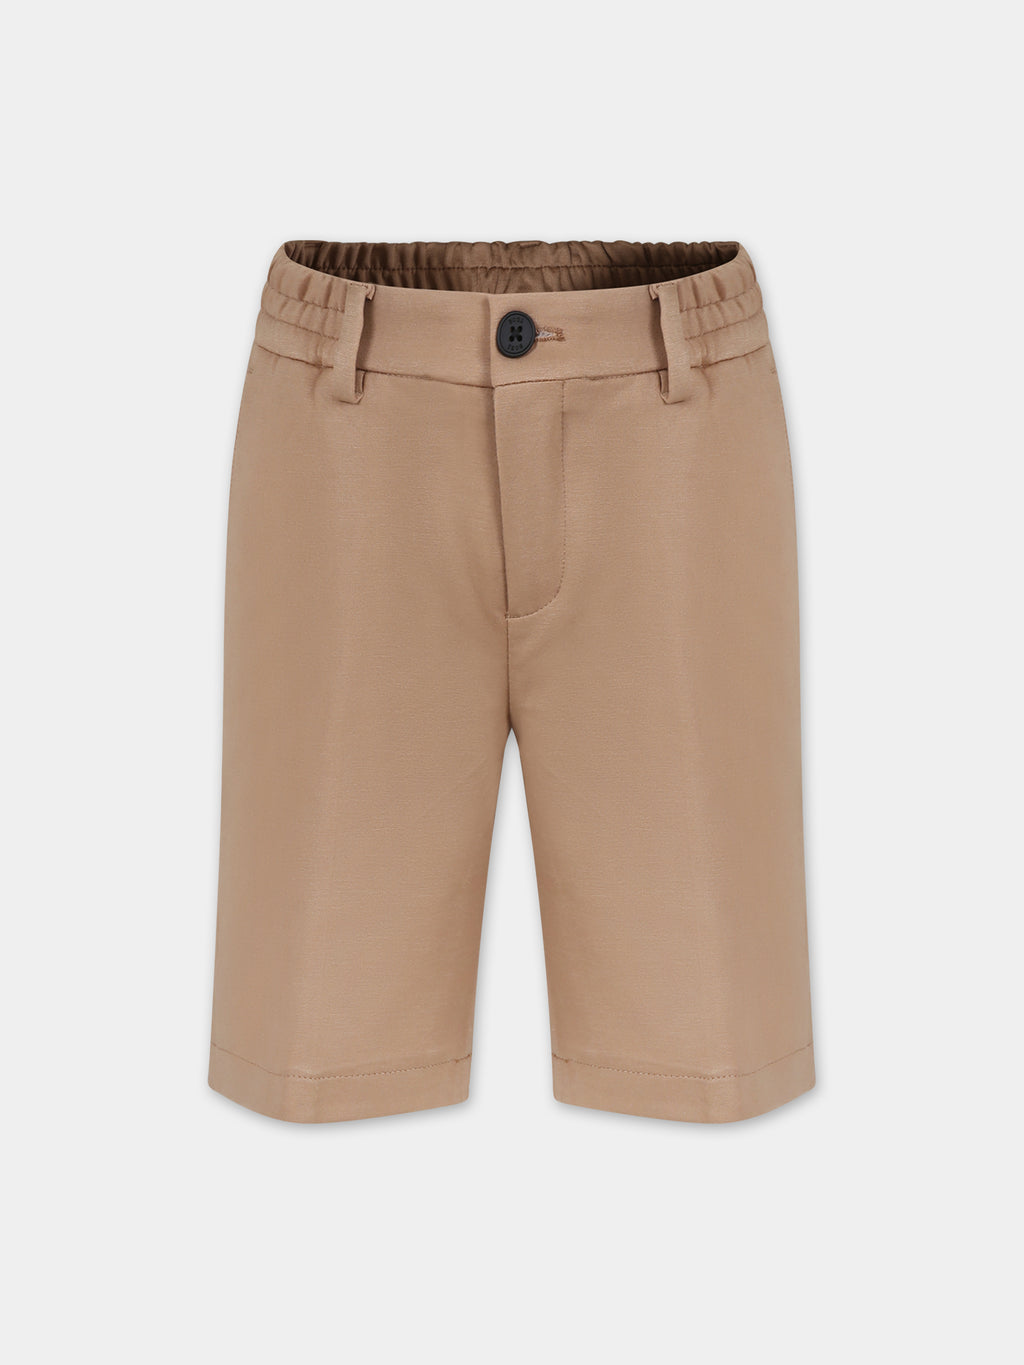 Beige elegant shorts for boy